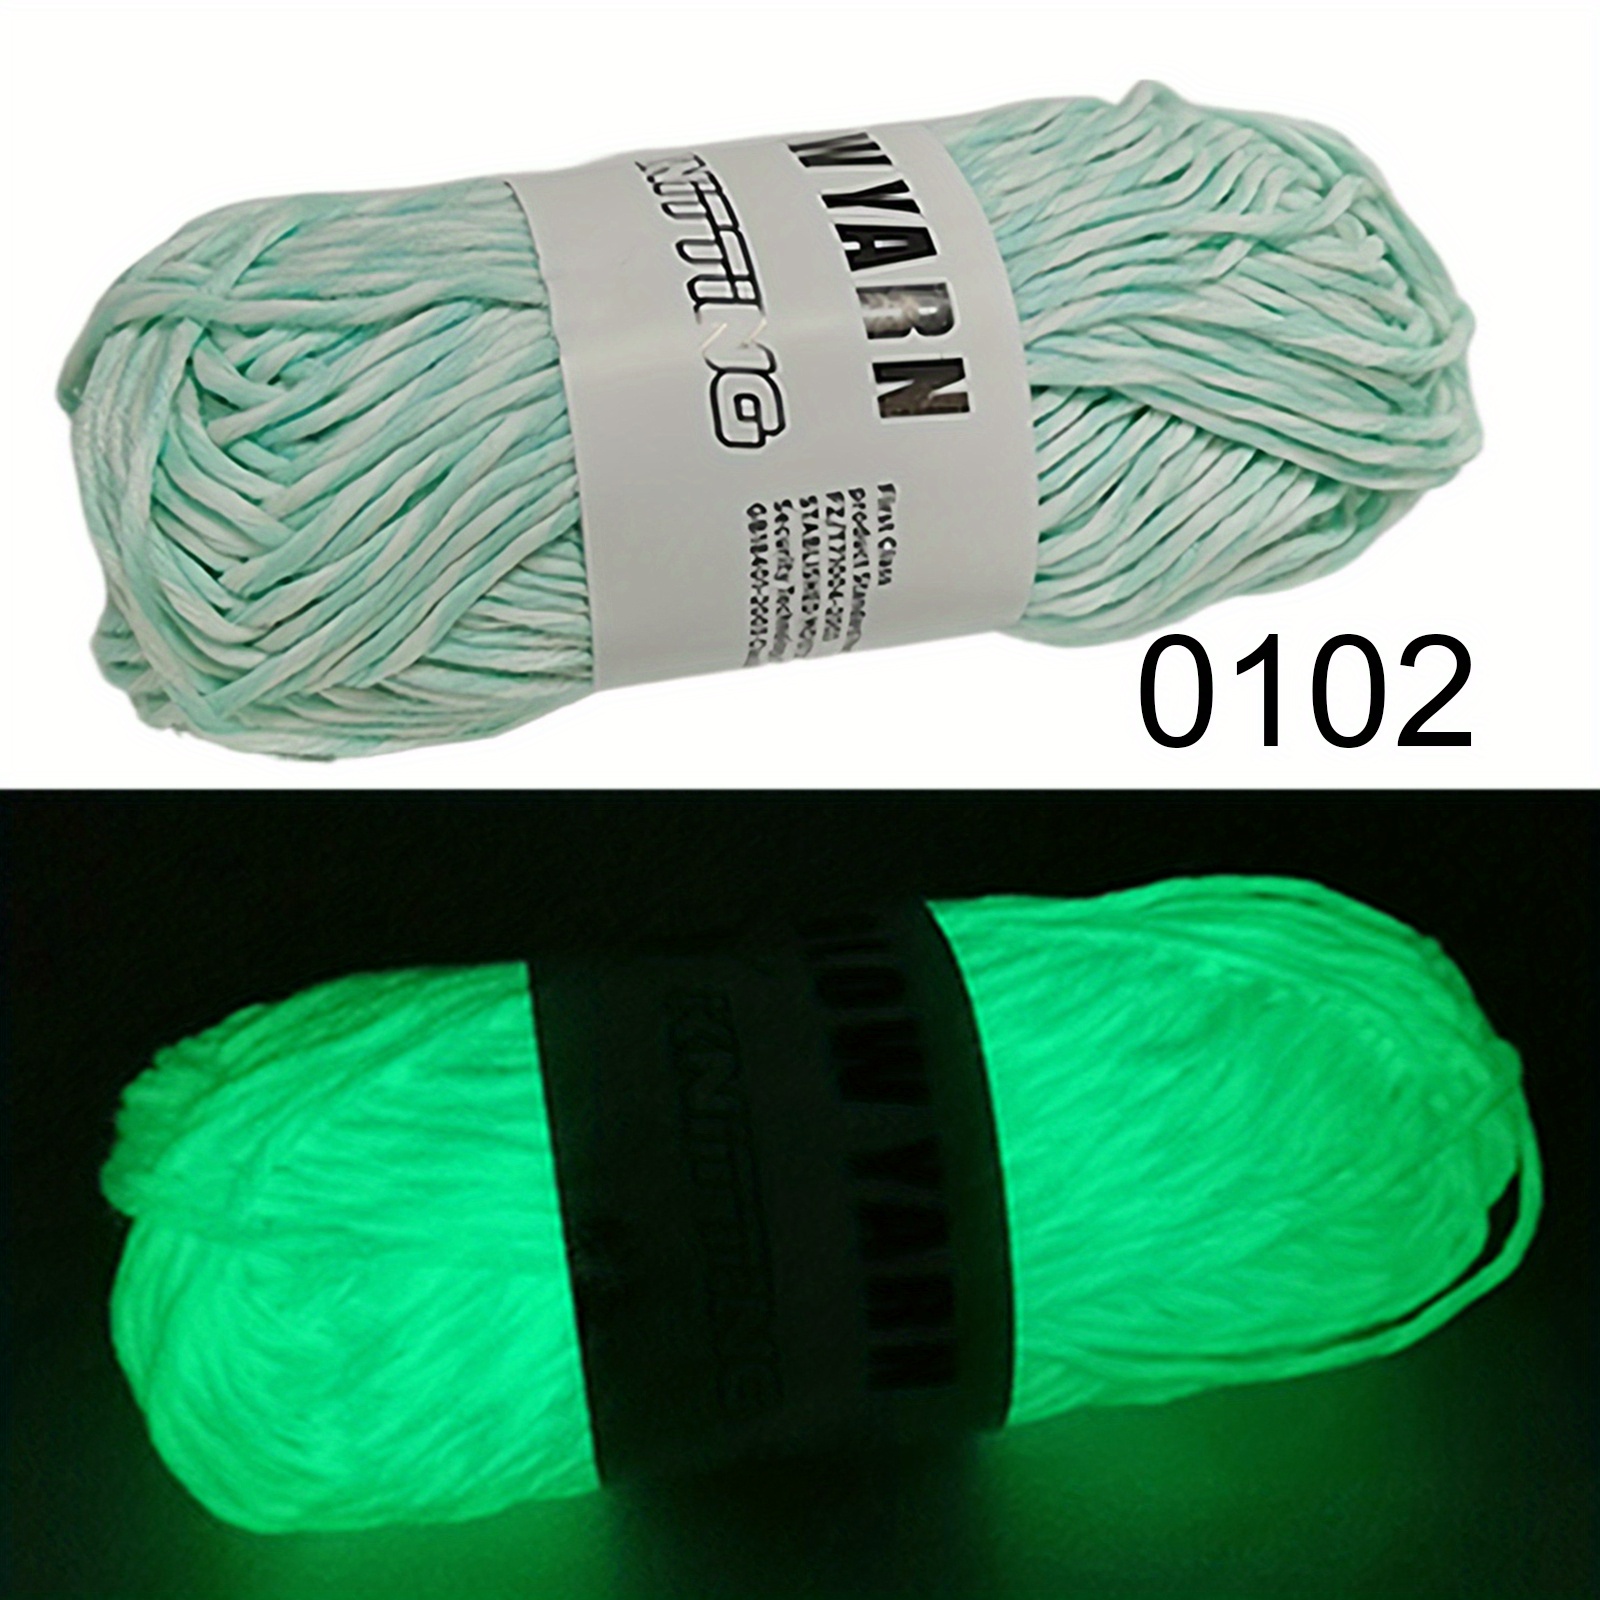 Glow in The Dark Yarn Luminous Crochet Yarn for Crocheting DIY